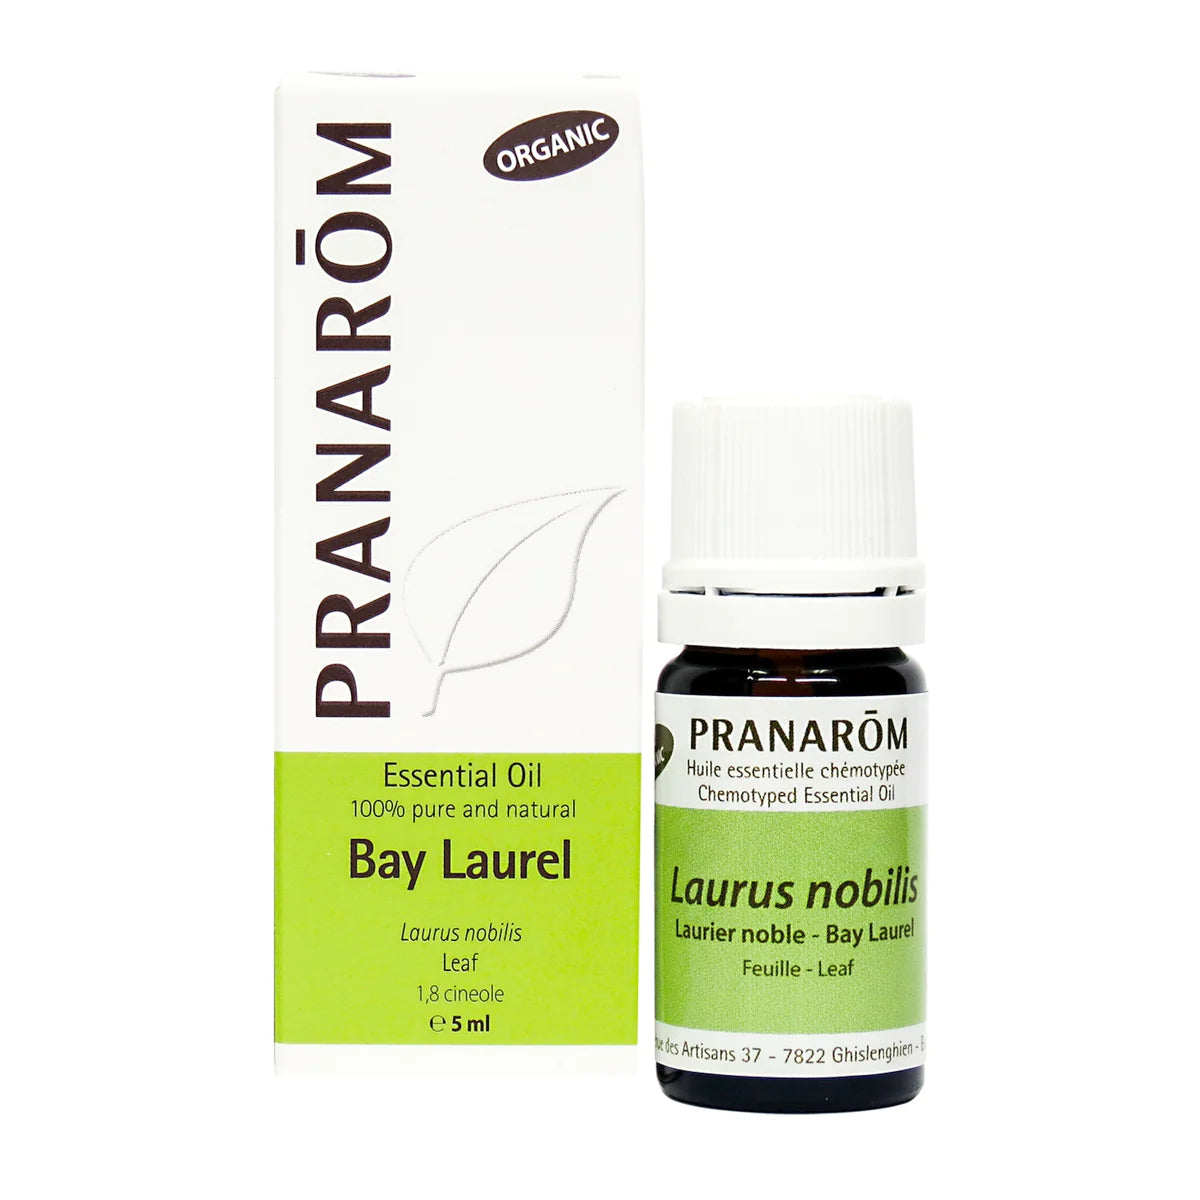 Bay Laurel essential oil, Organic 5 ml